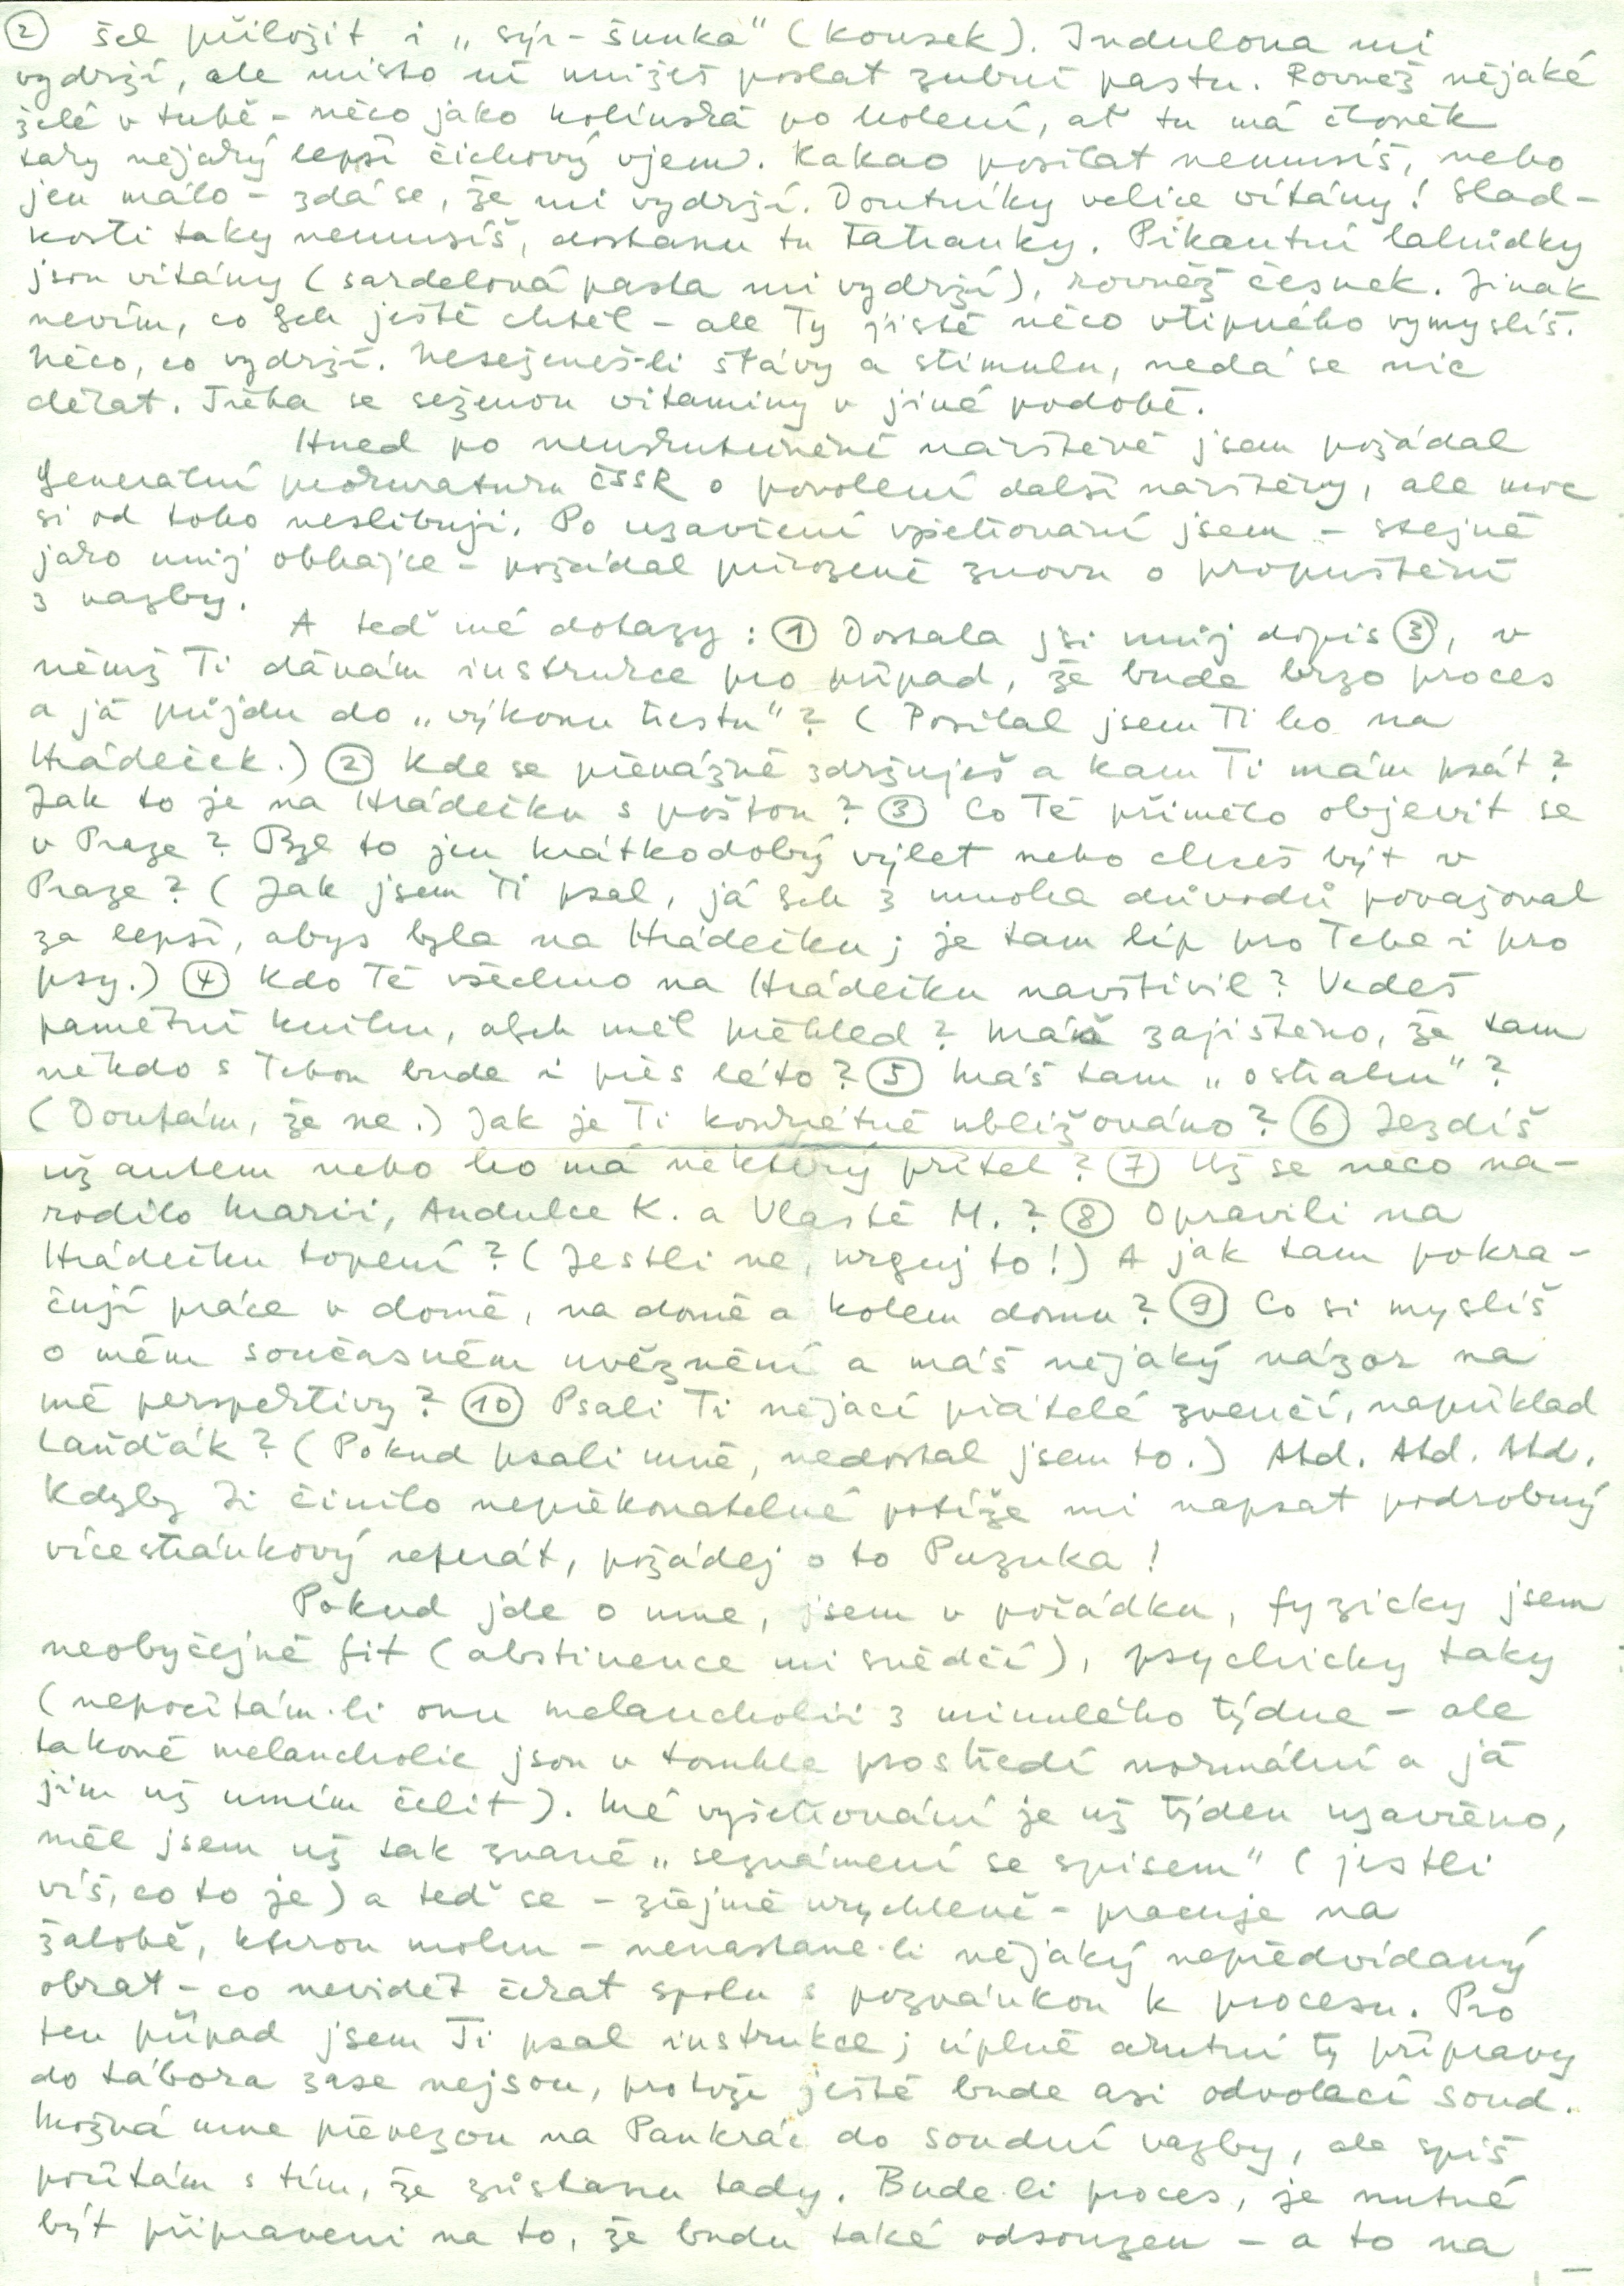 Václav Havelʼs letter to Olga Havlová, 8 July 1979